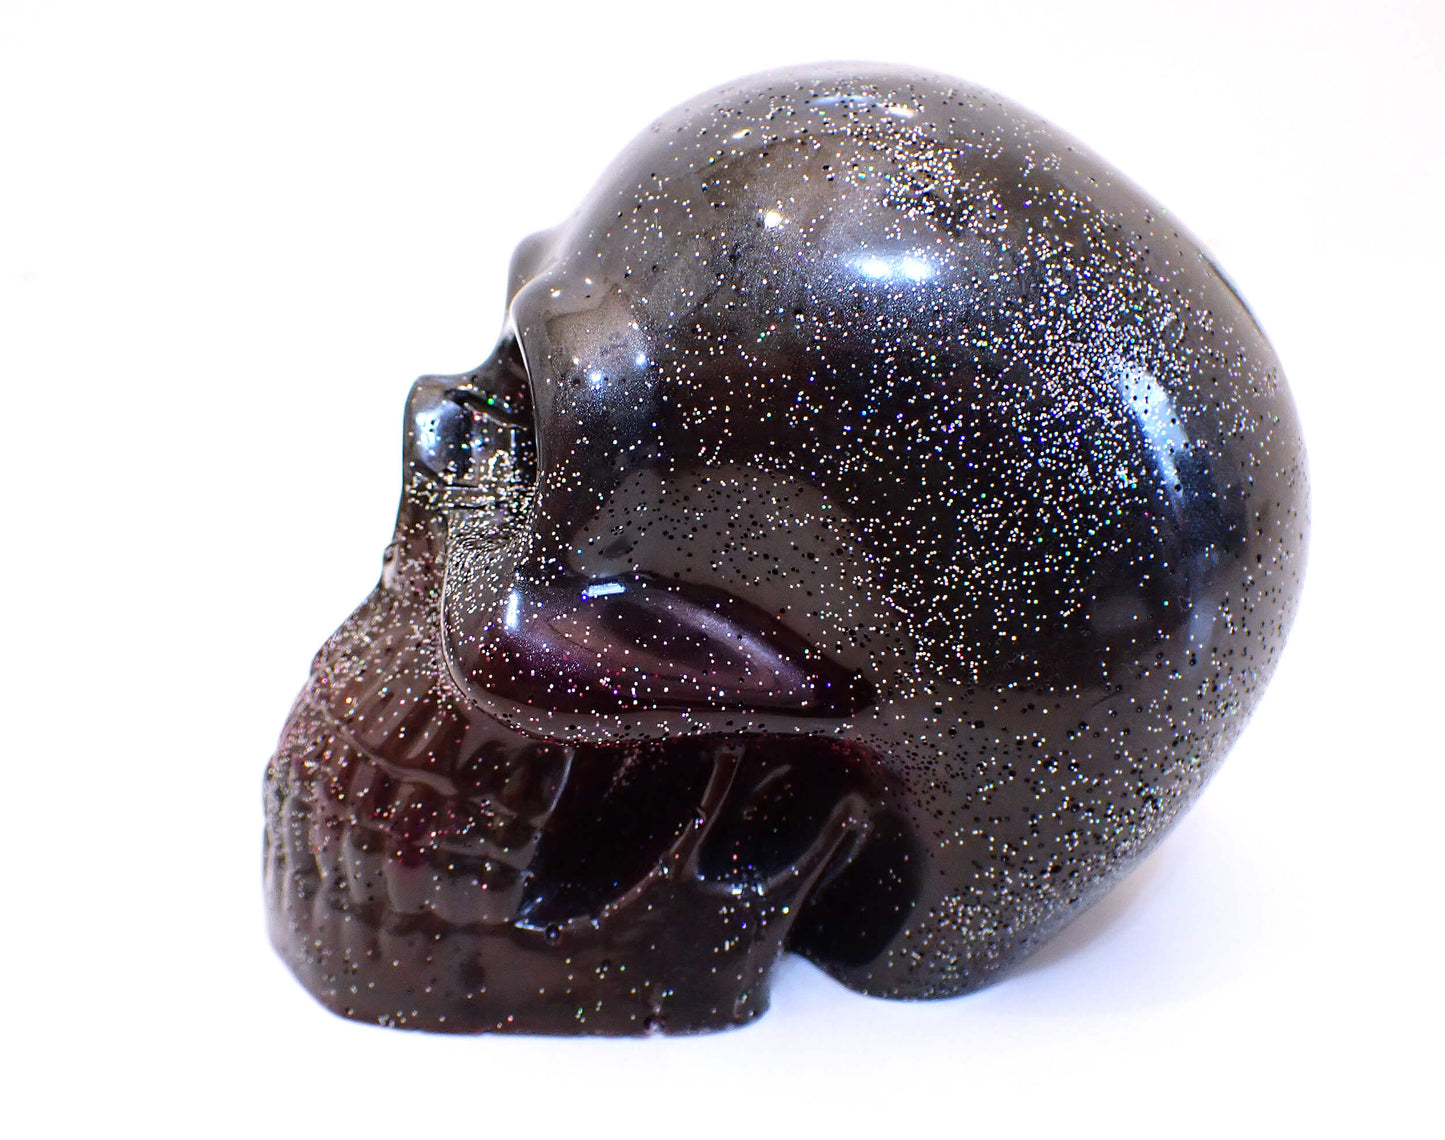 Large Black and Dark Purple Handmade Resin Skull with Holographic Glitter